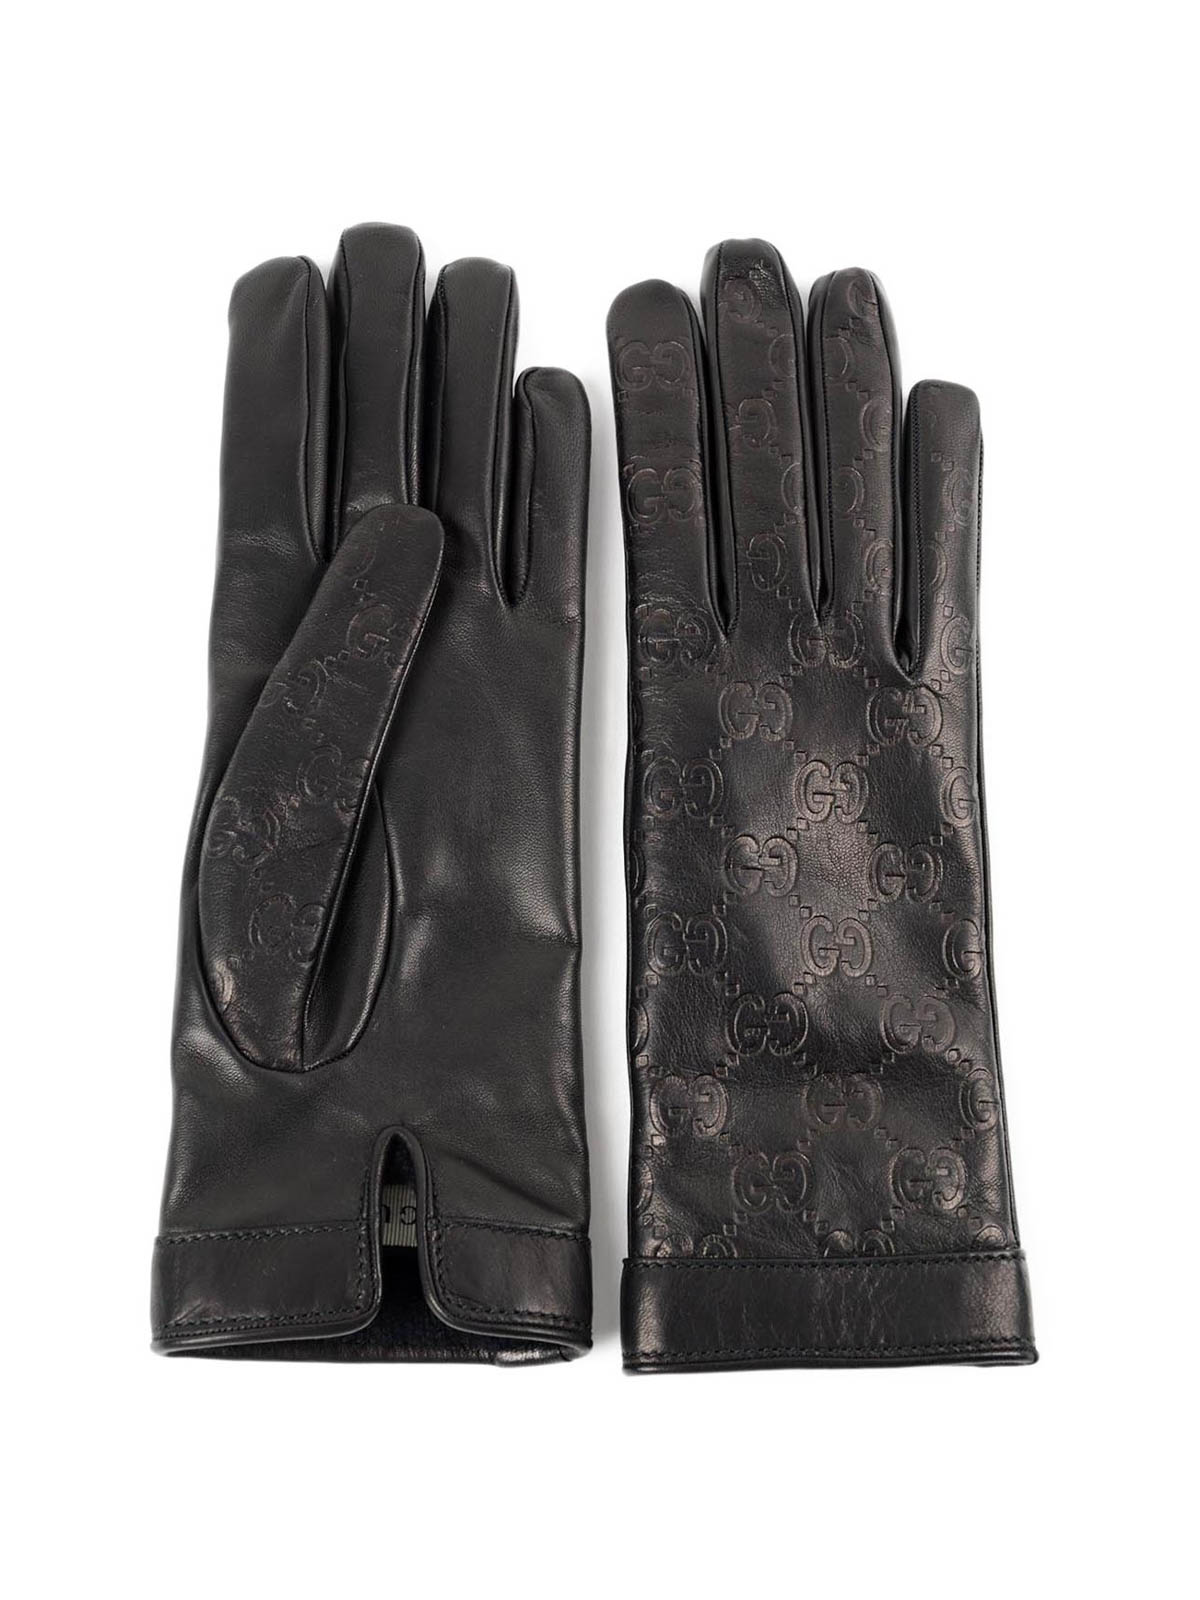 Gloves Gucci - Leather GG gloves - 436104B65001000 | Shop online at iKRIX